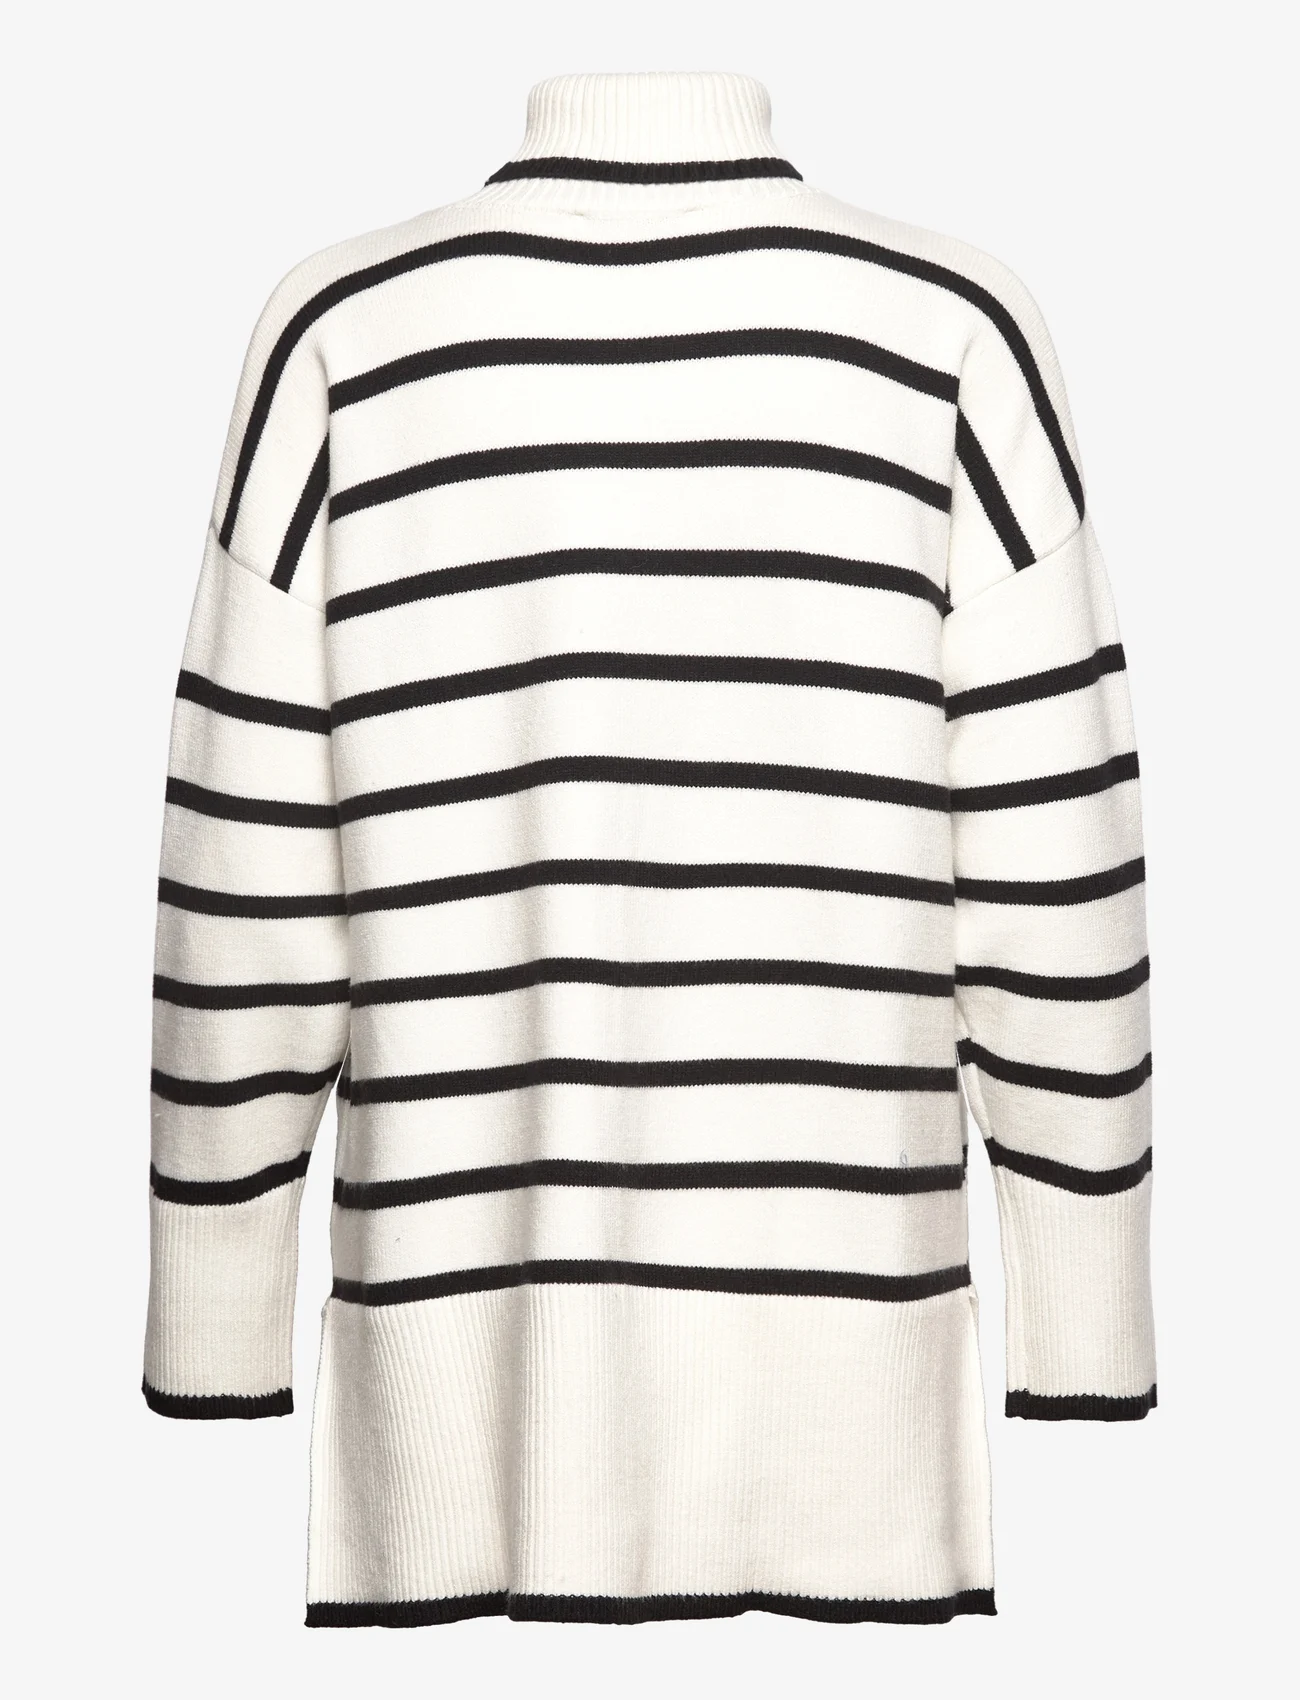 A-View - Bella knit blouse - poolopaidat - white with black stripes - 1